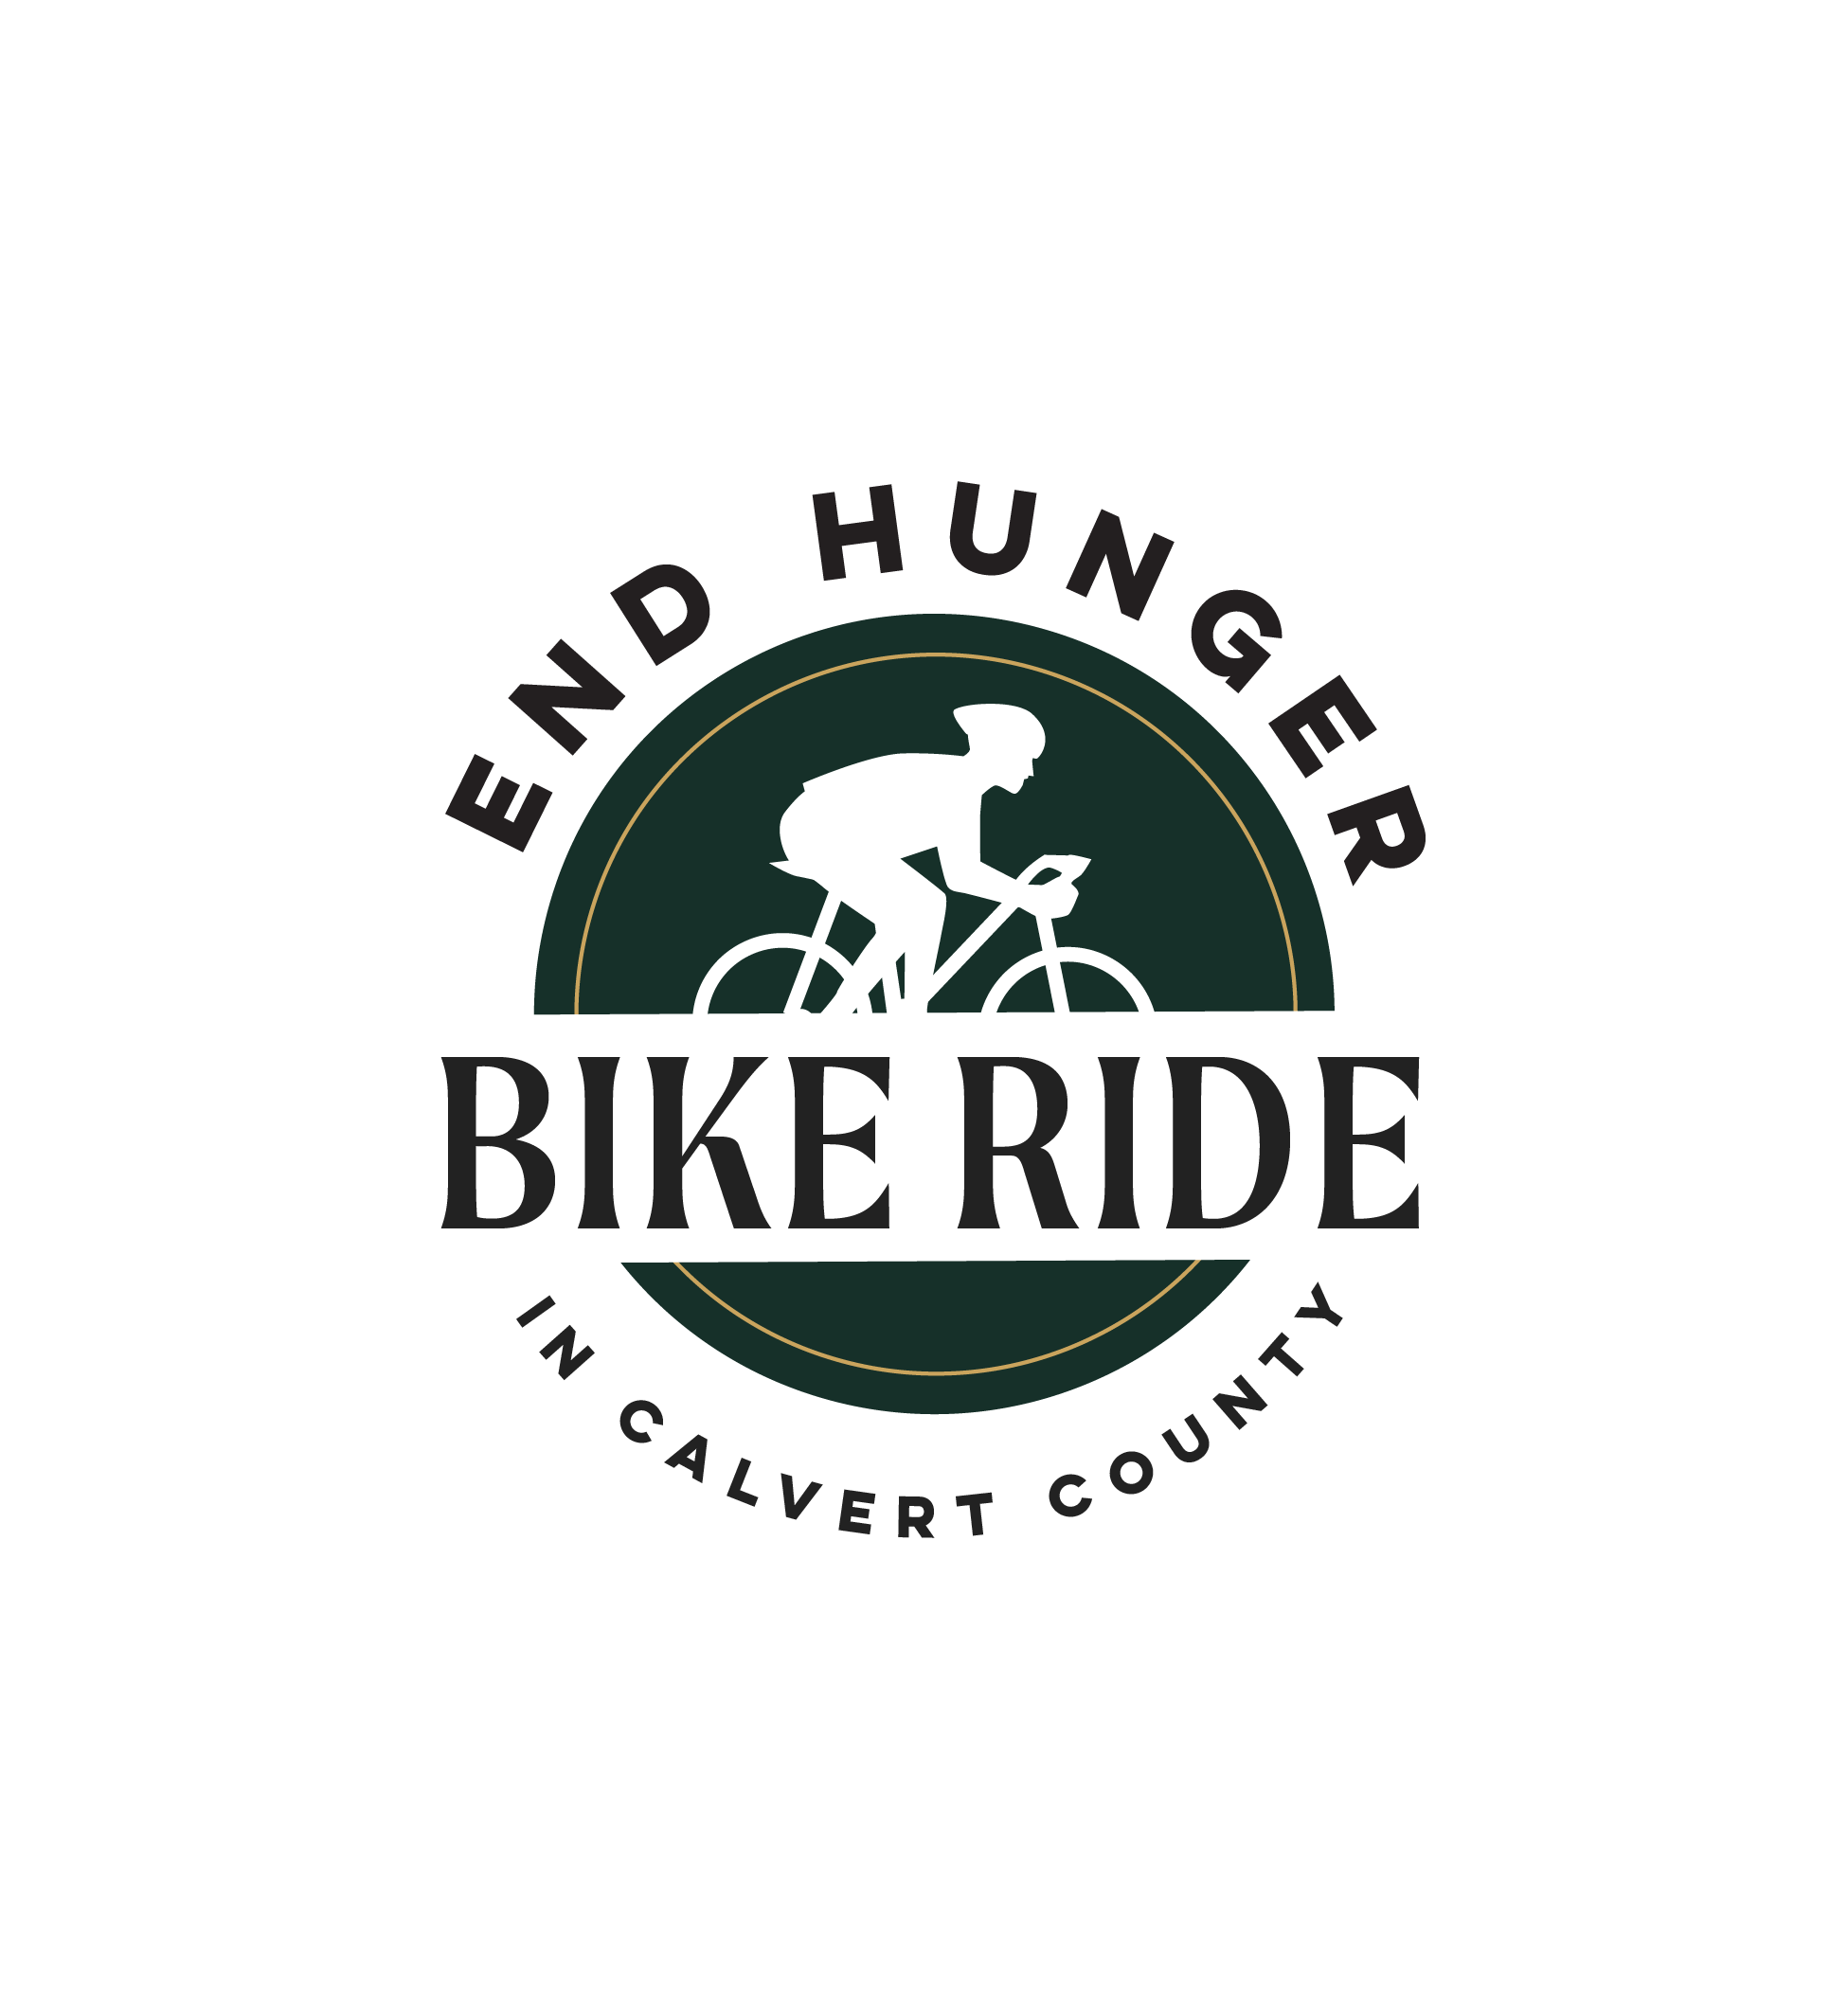 2022 End Hunger Bike Ride